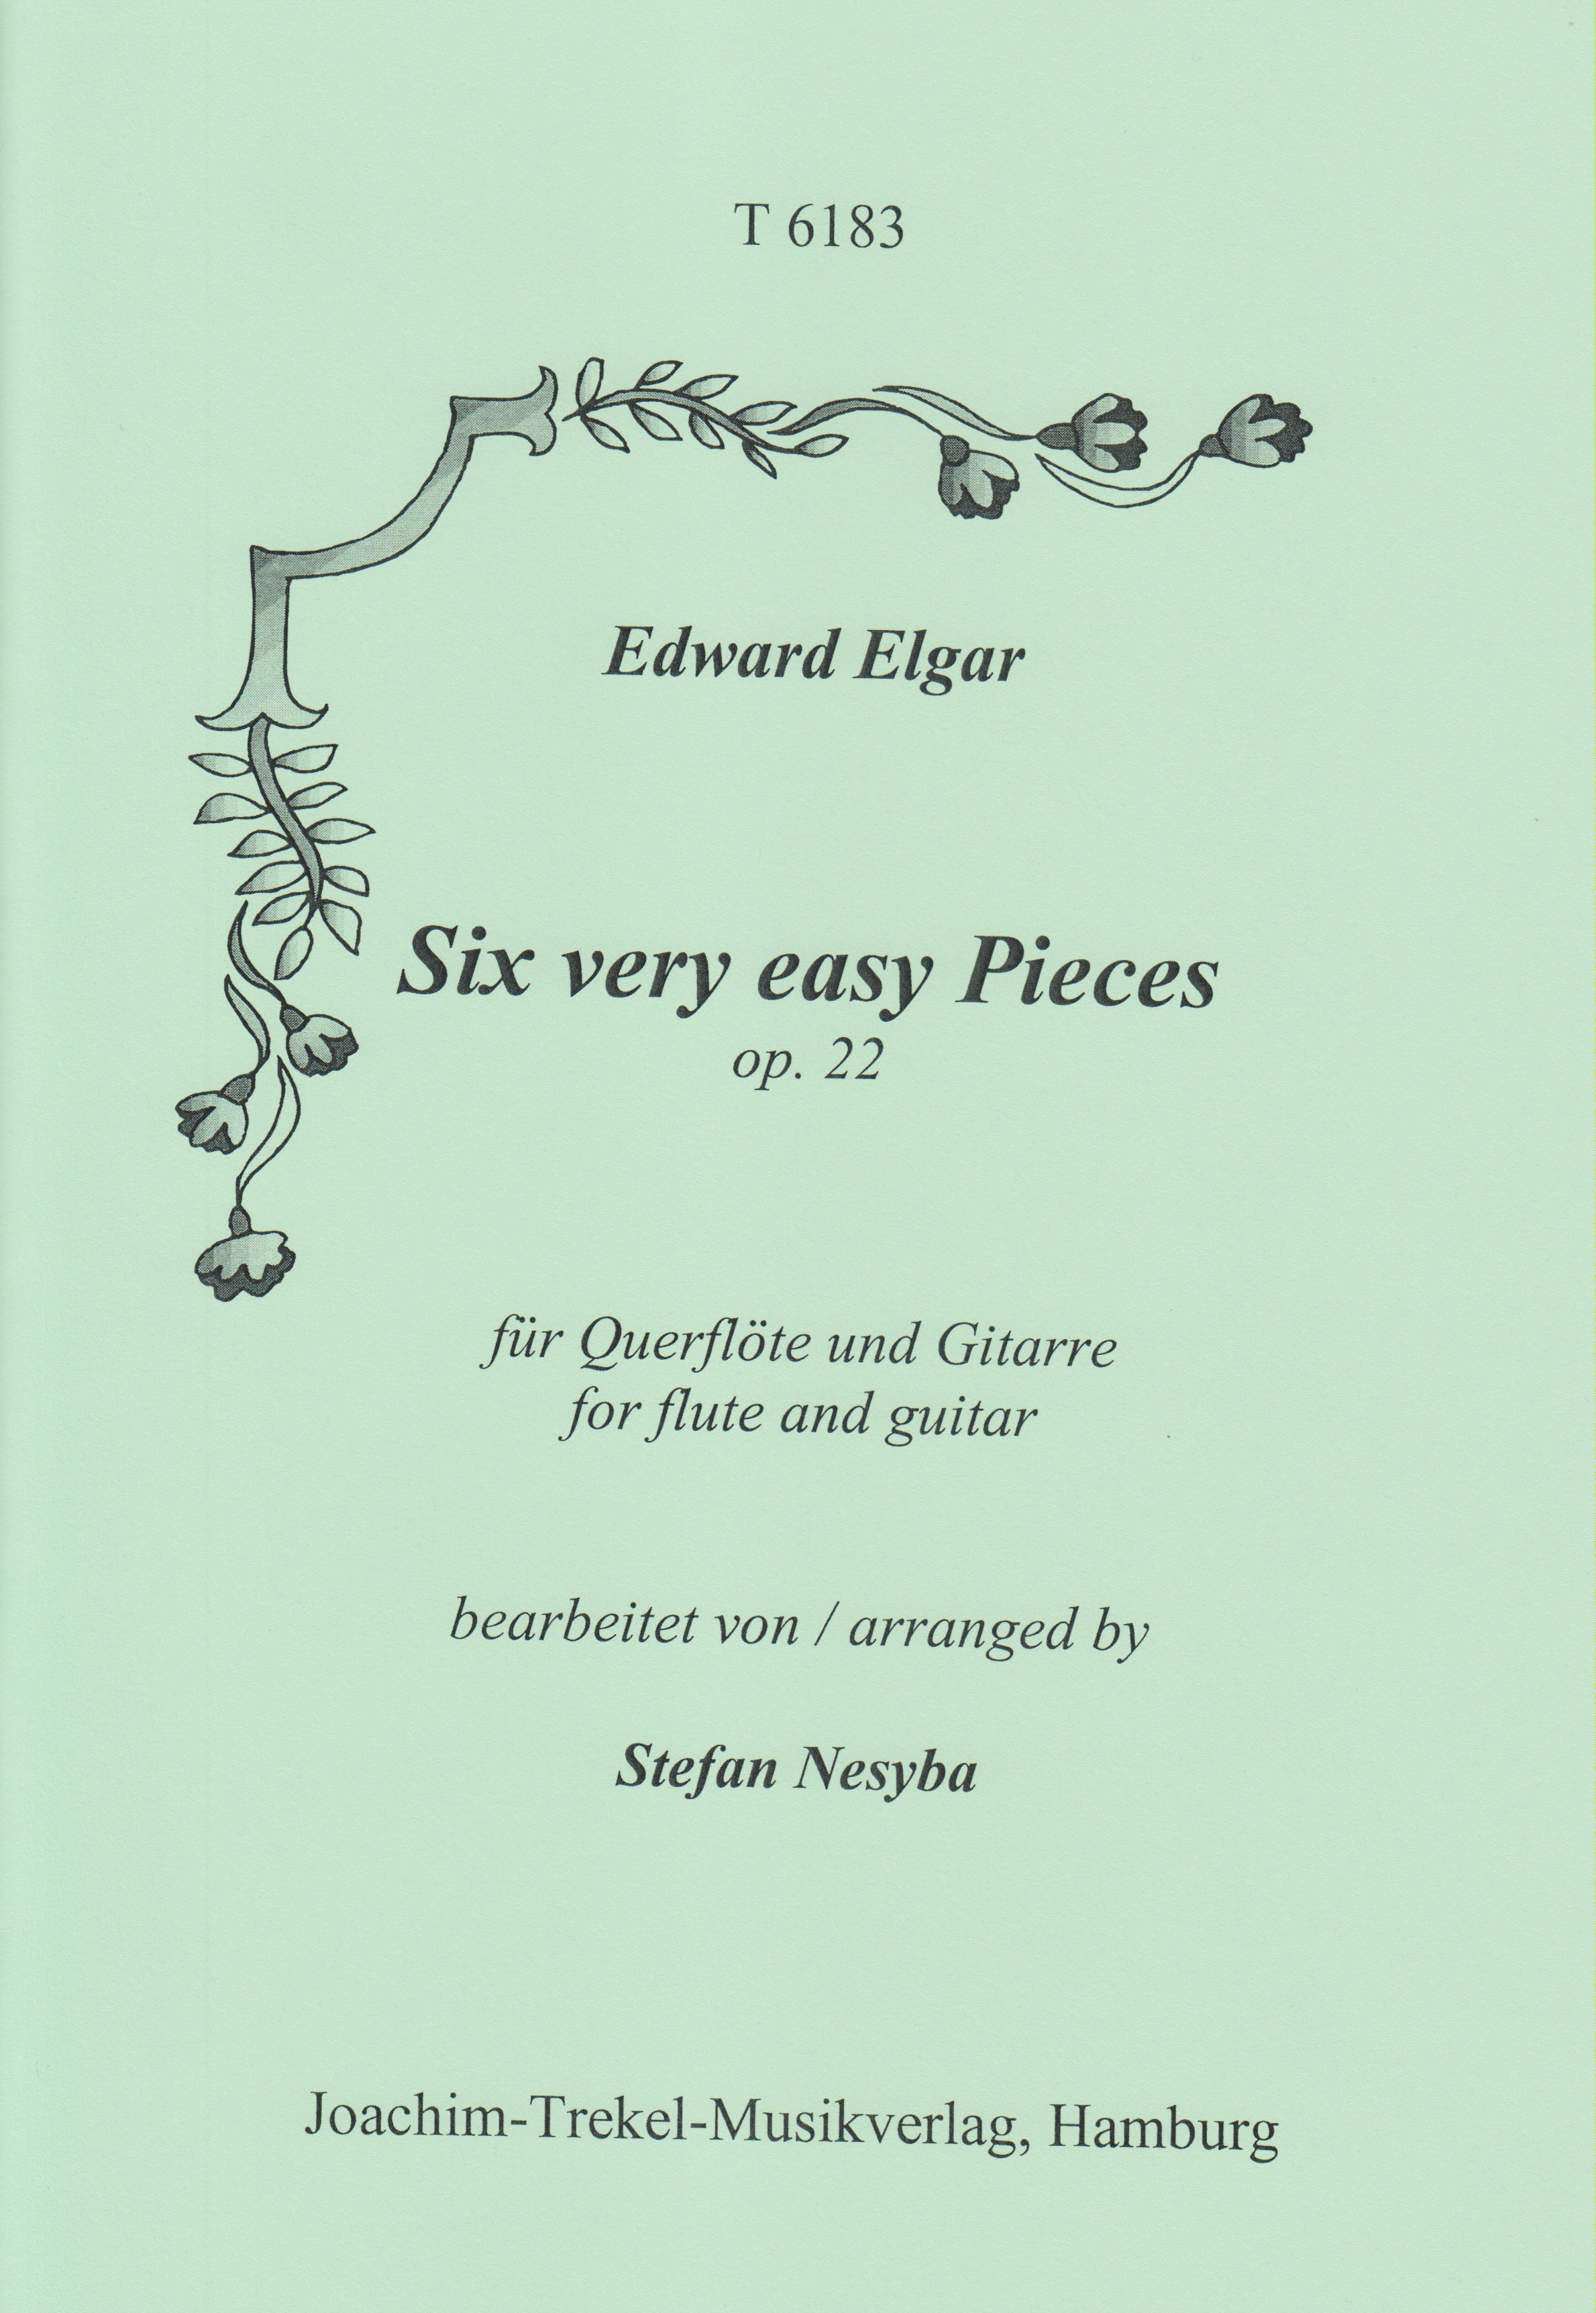 6 very easy pieces, op. 22